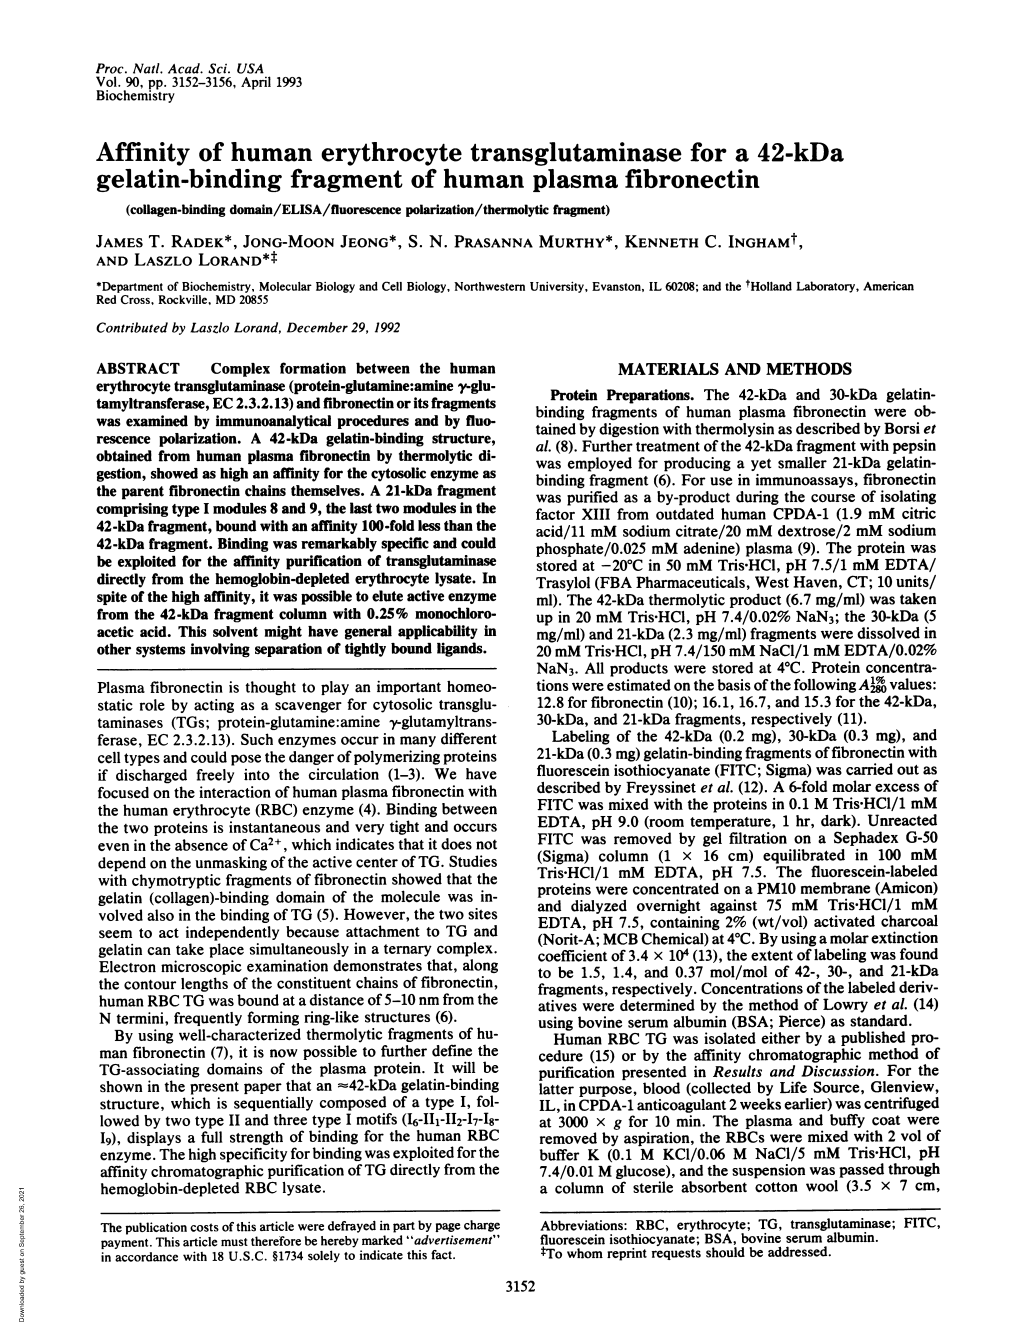 Affinity of Human Erythrocyte Transglutaminase for a 42-Kda Gelatin-Binding Fragment of Human Plasma Fibronectin